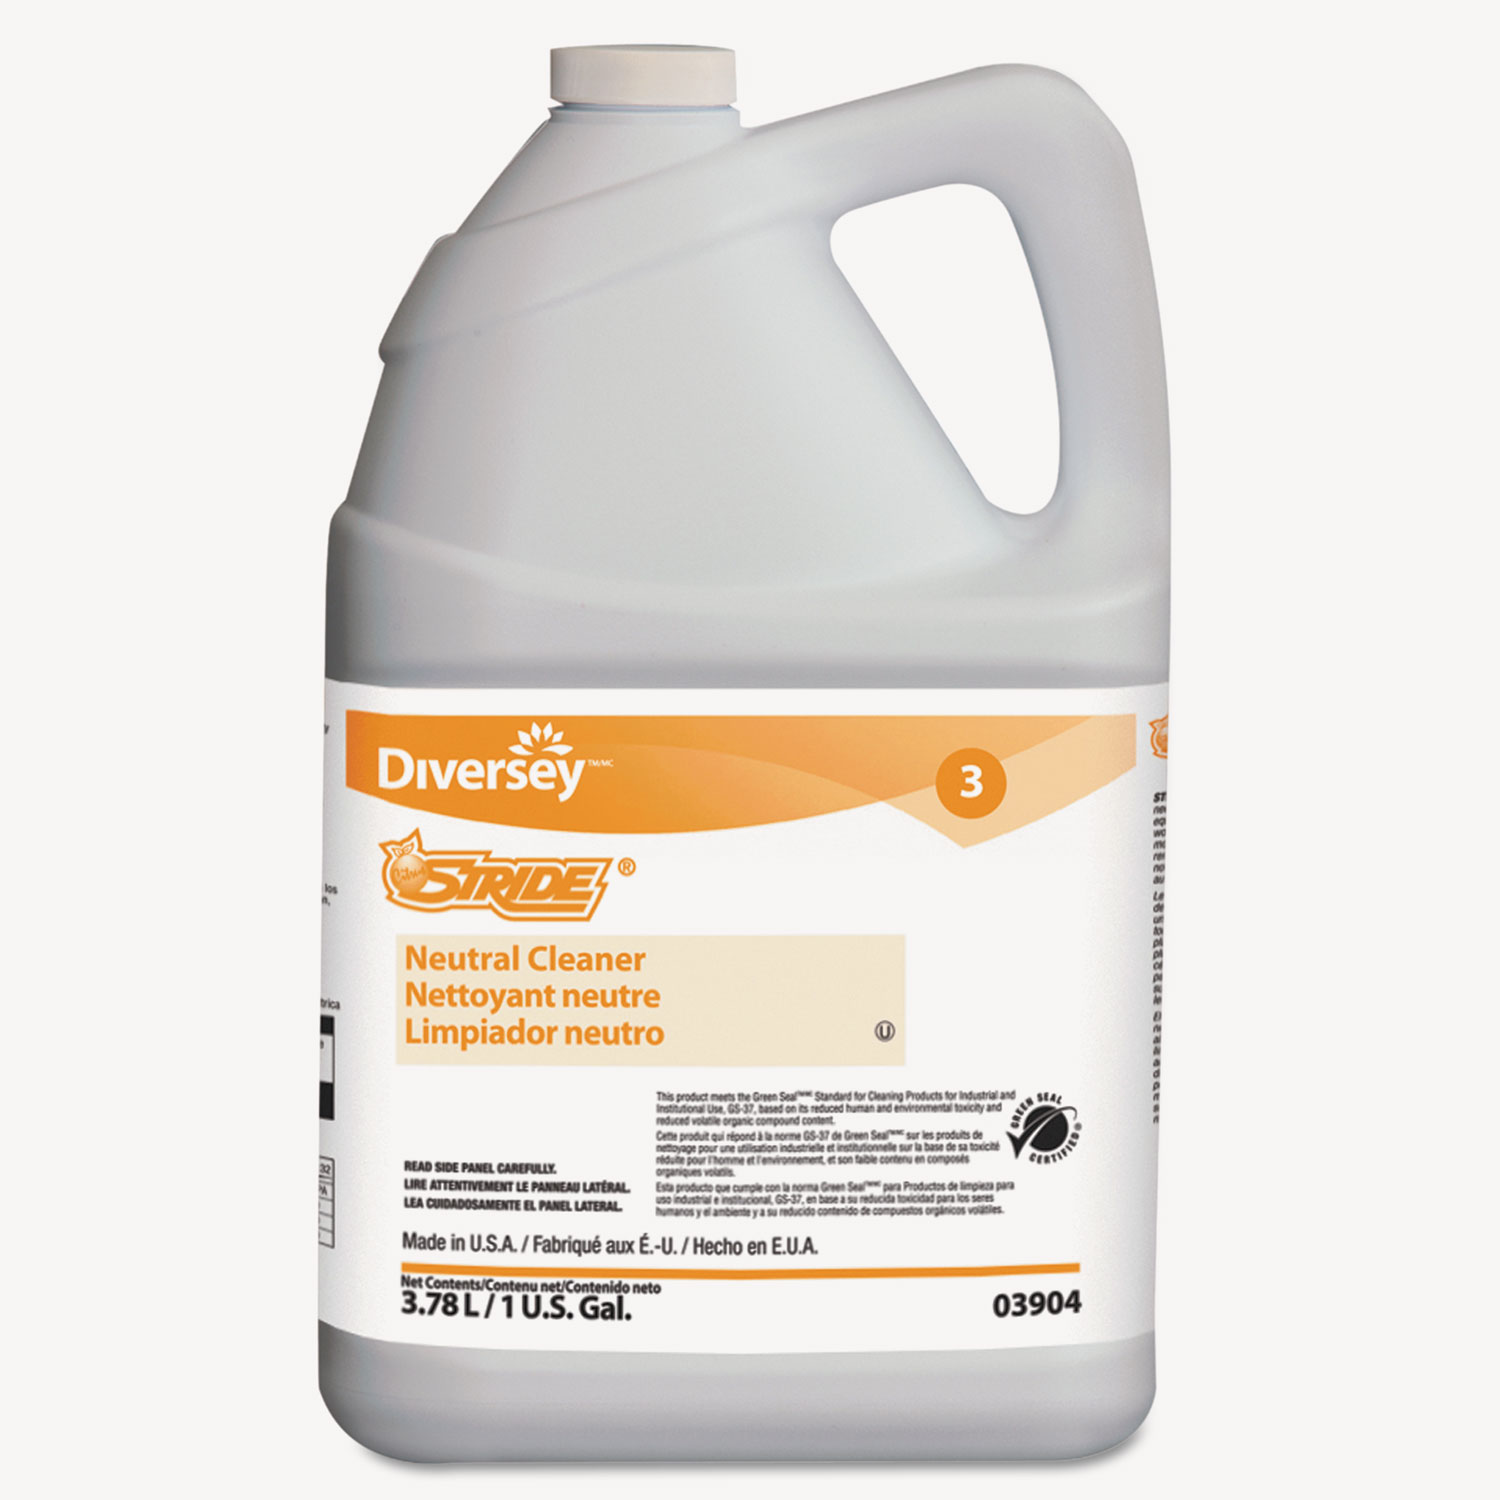  Diversey 903904 Stride Neutral Cleaner, Citrus, 1 gal, 4 Bottles/Carton (DVO903904) 